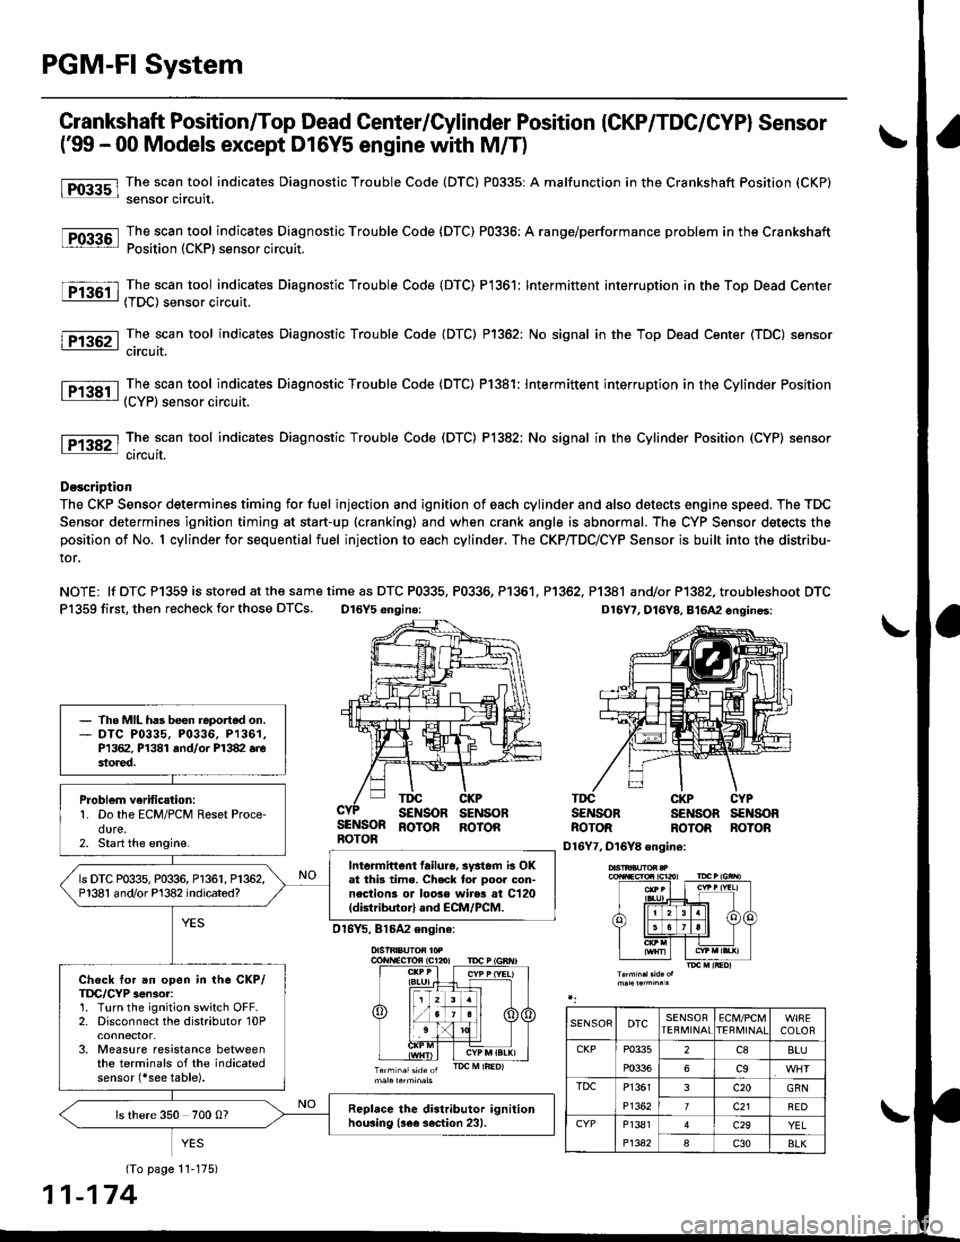 HONDA CIVIC 1997 6.G User Guide PGM-FI System
l-Fos3sl
tFos36l
tF1361 l
Fr362-1
tF13sil
Crankshaft Position/Top Dead Center/Cylinder Position (CKP/TDC/CYPI Sensor
f99 - 00 Models except D16Y5 engine with M/T)
The scan tool indicates